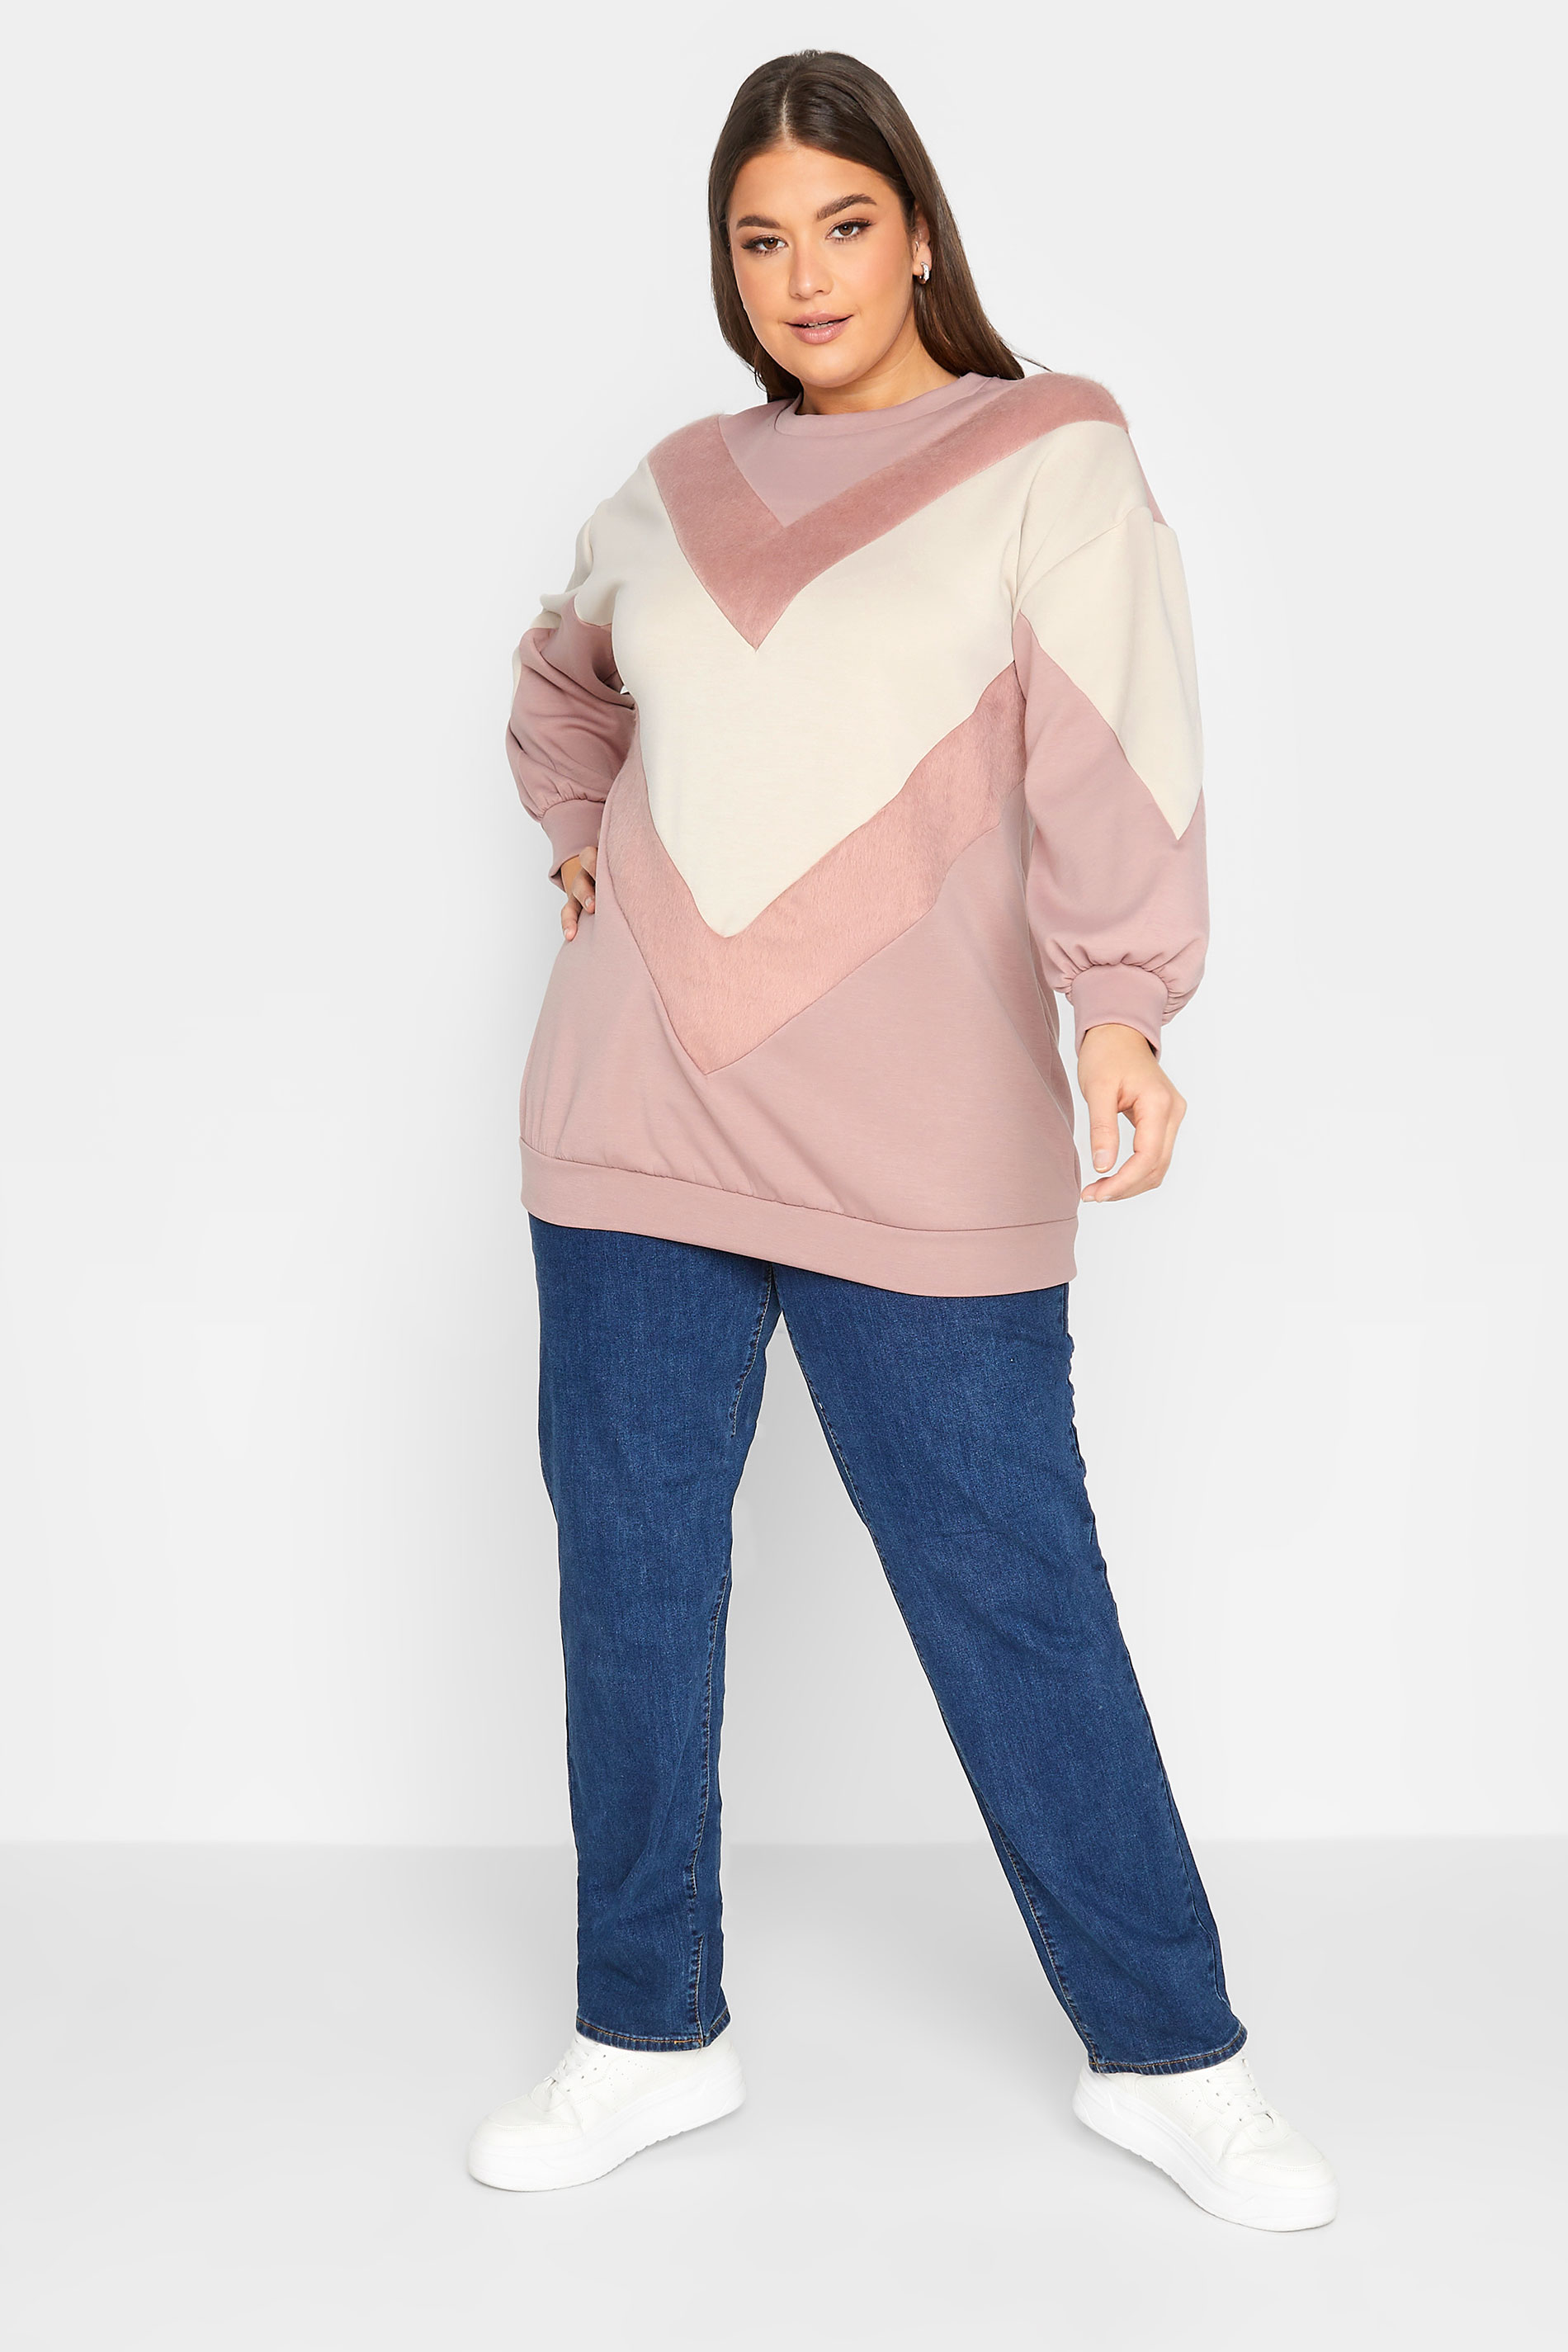 YOURS LUXURY Plus Size Pink Faux Fur Chevron Sweatshirt | Yours Clothing 3